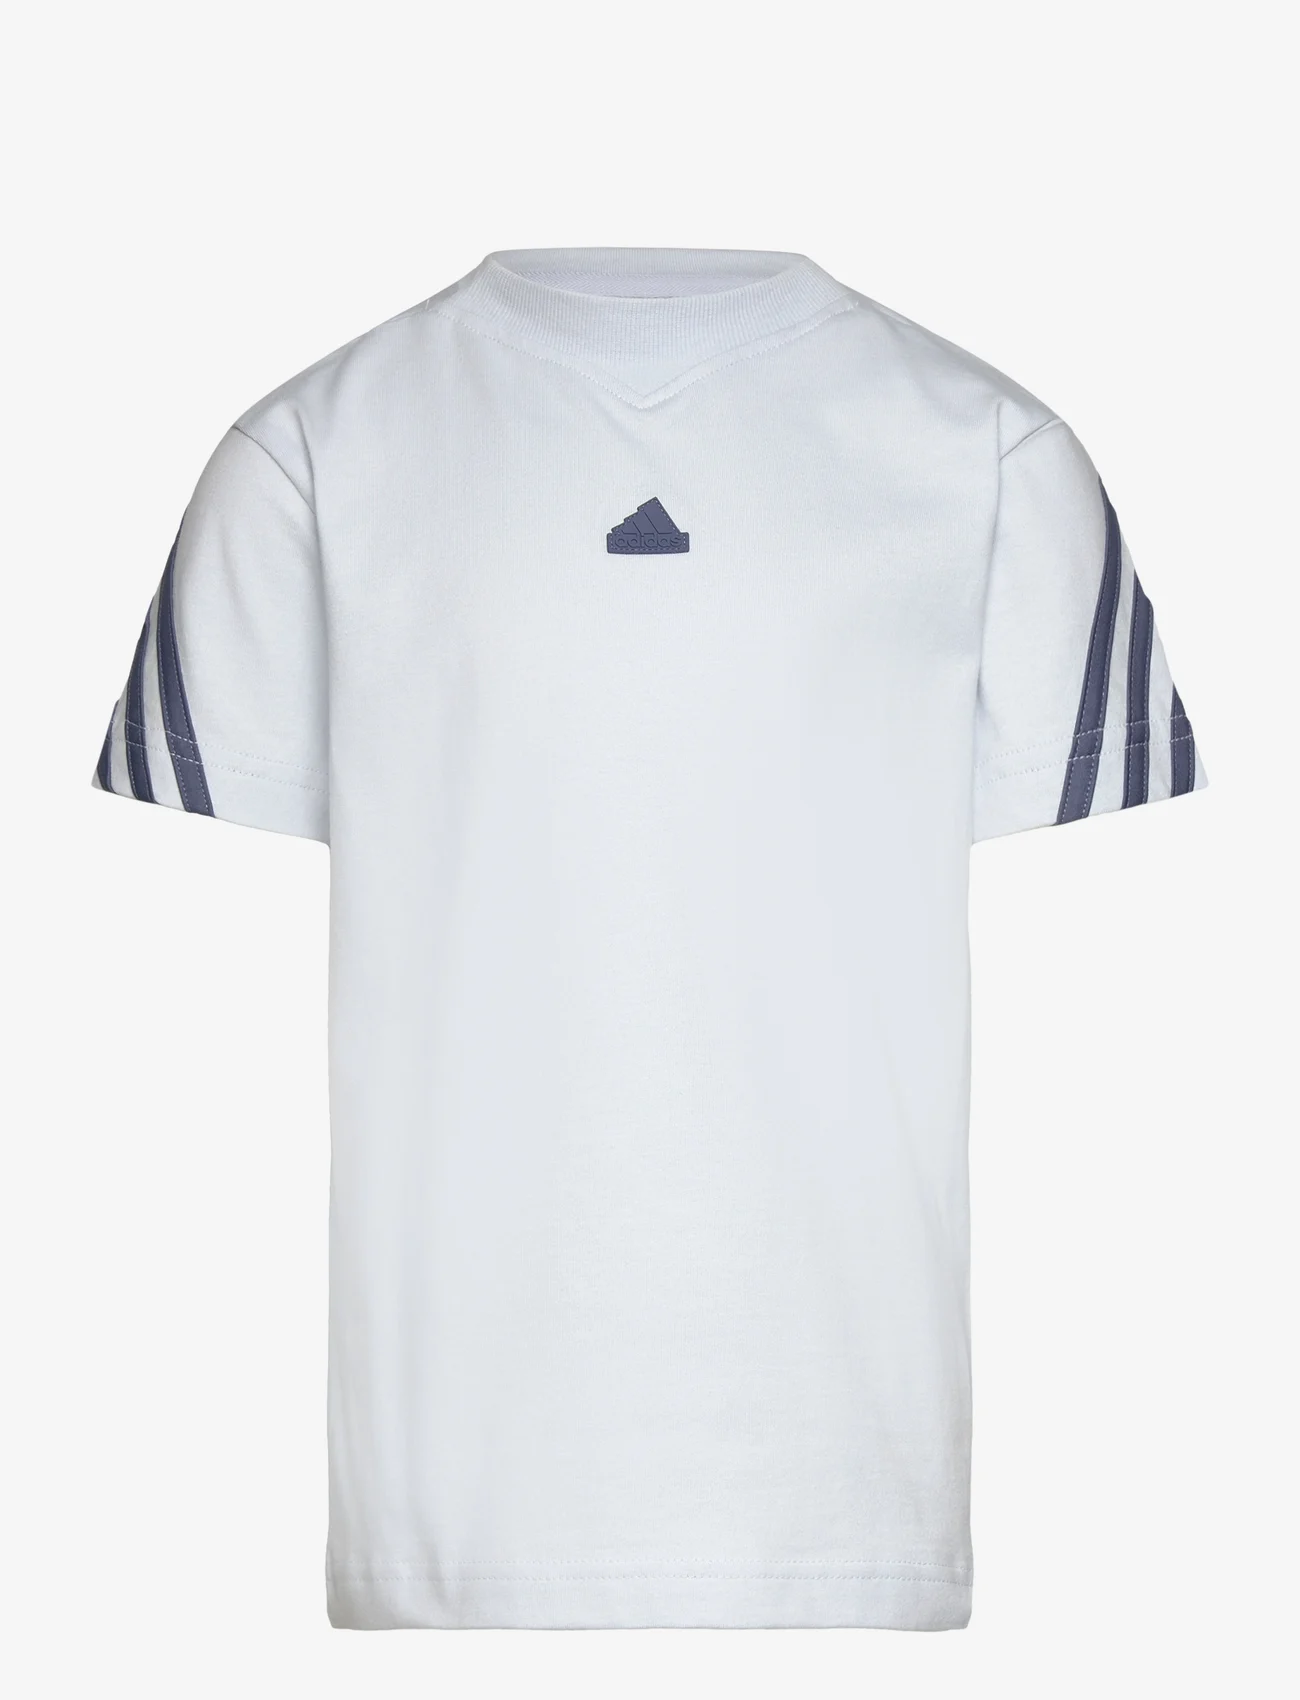 adidas Performance - Future Icons 3-Stripes T-Shirt - krótki rękaw - halblu/prloin - 0